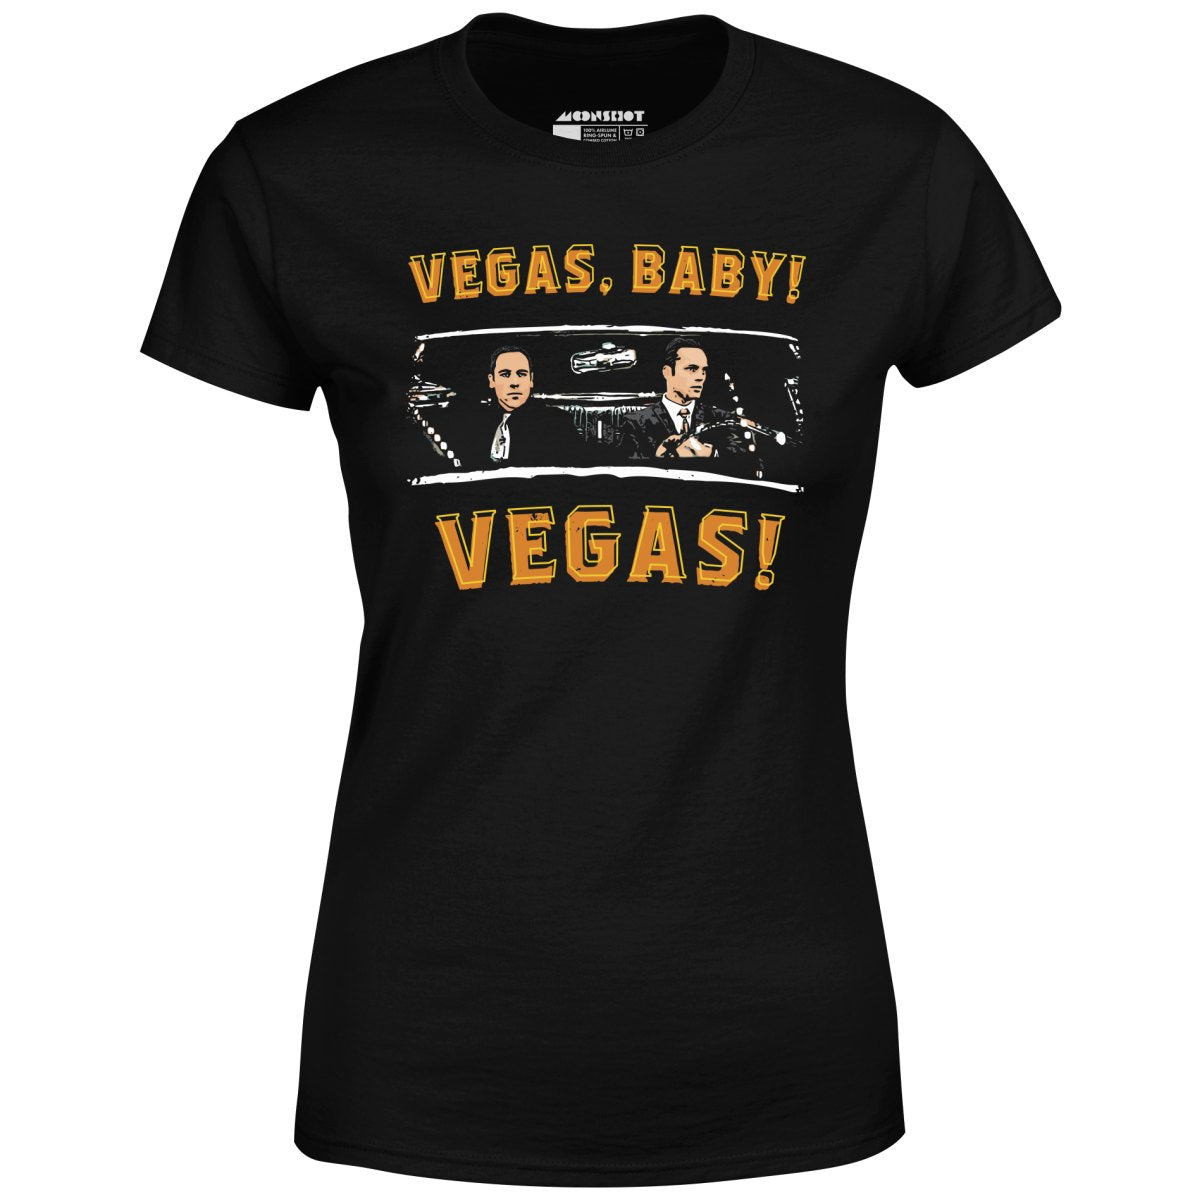 Vegas, Baby! Vegas! - Women's T-Shirt